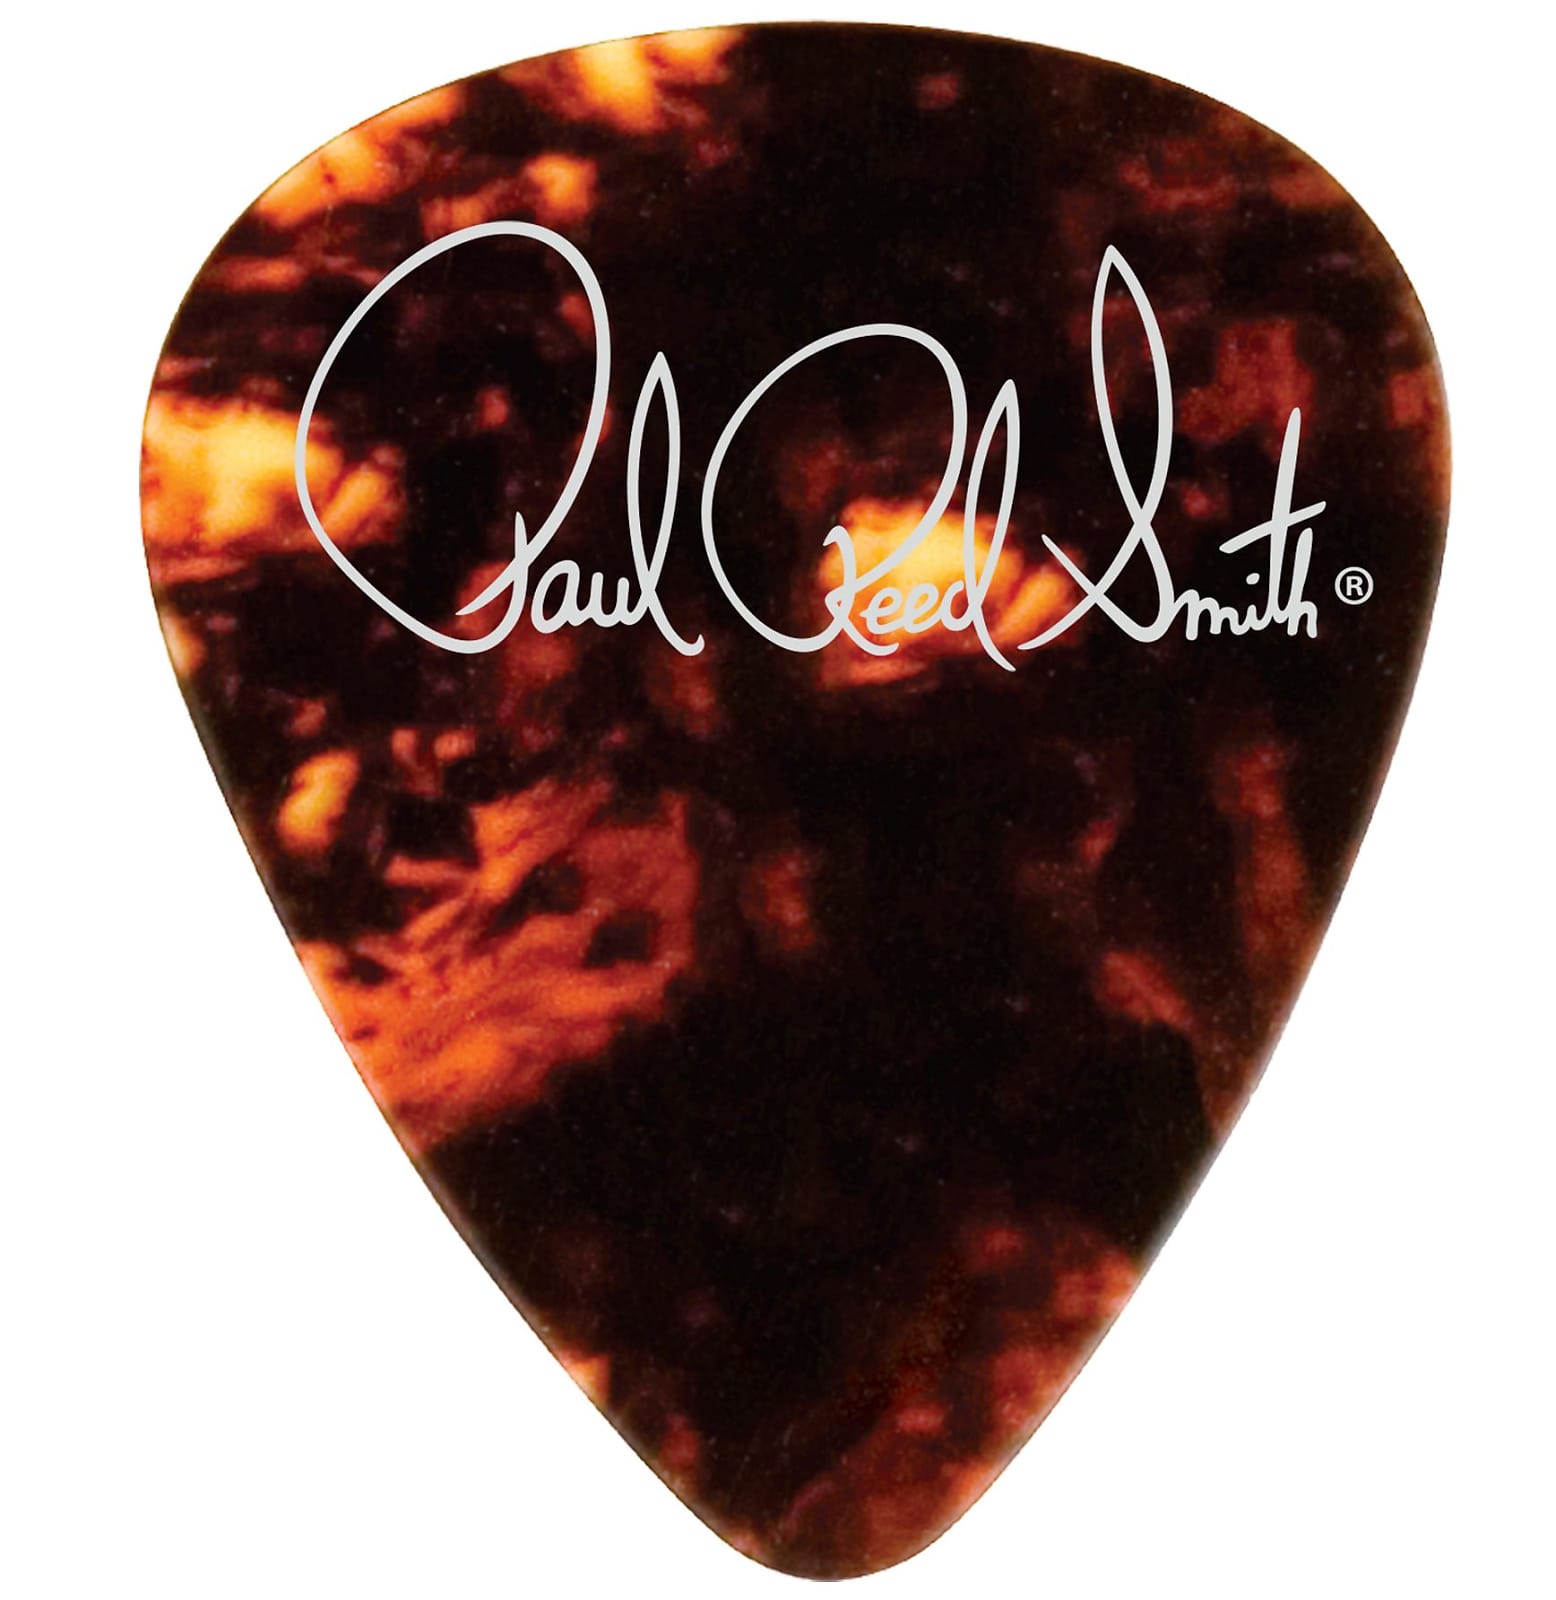 Paul Reed Smith PRS Tortoise Celluloid Guitar Picks (12) – Medium